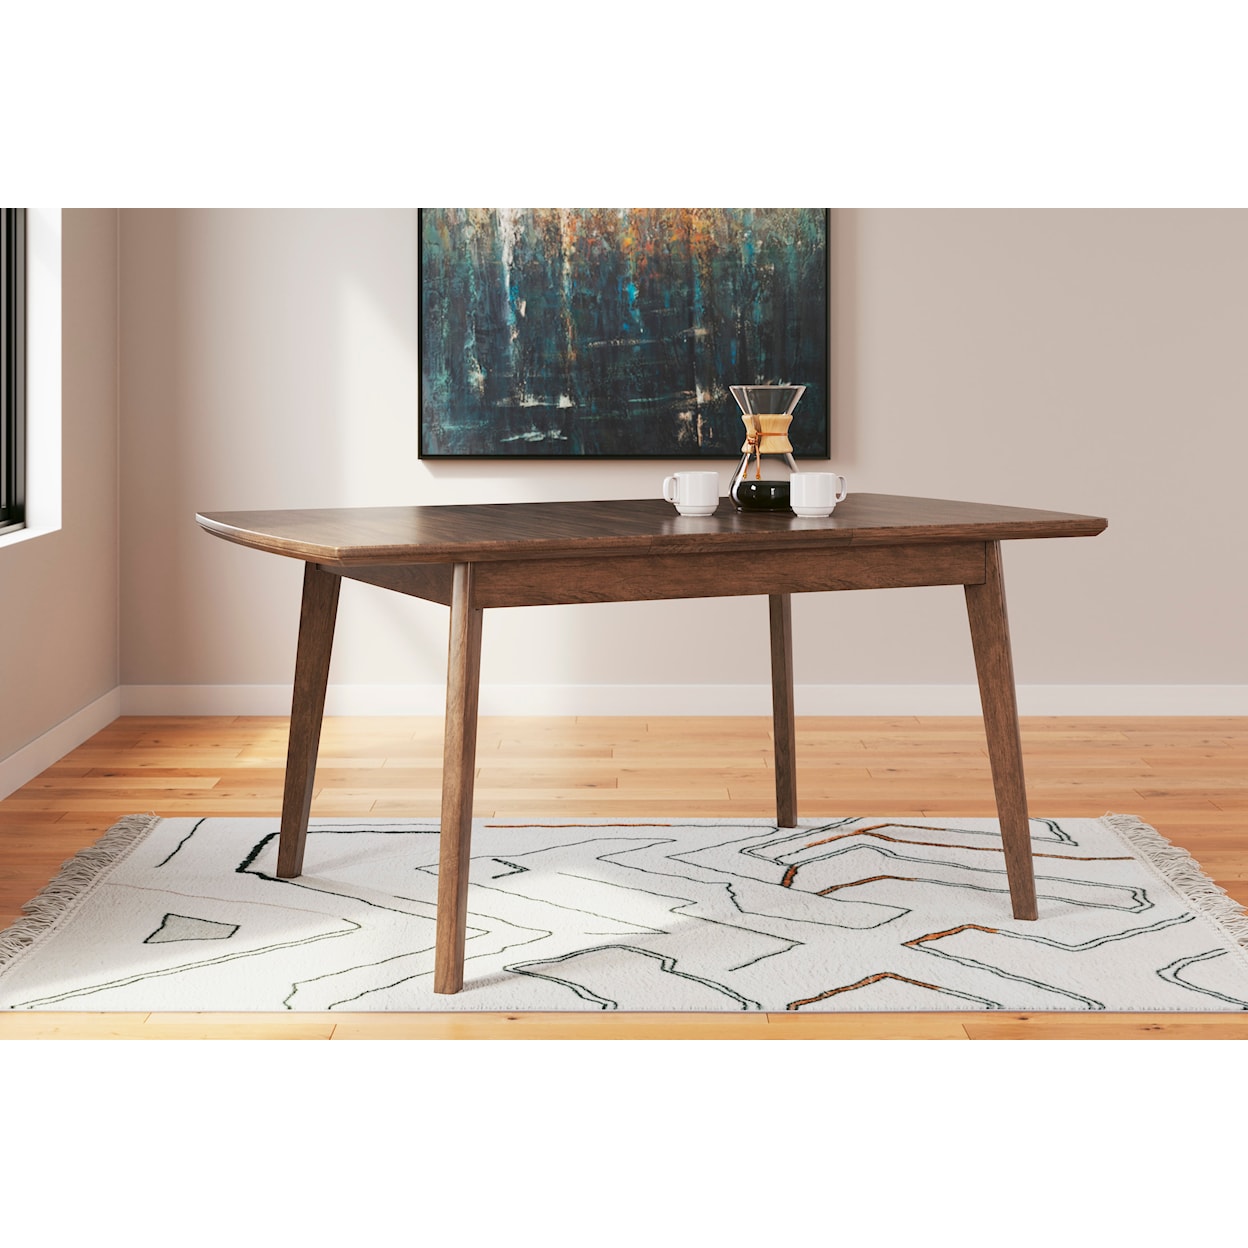 Ashley Furniture Signature Design Lyncott 5-Piece Dining Set